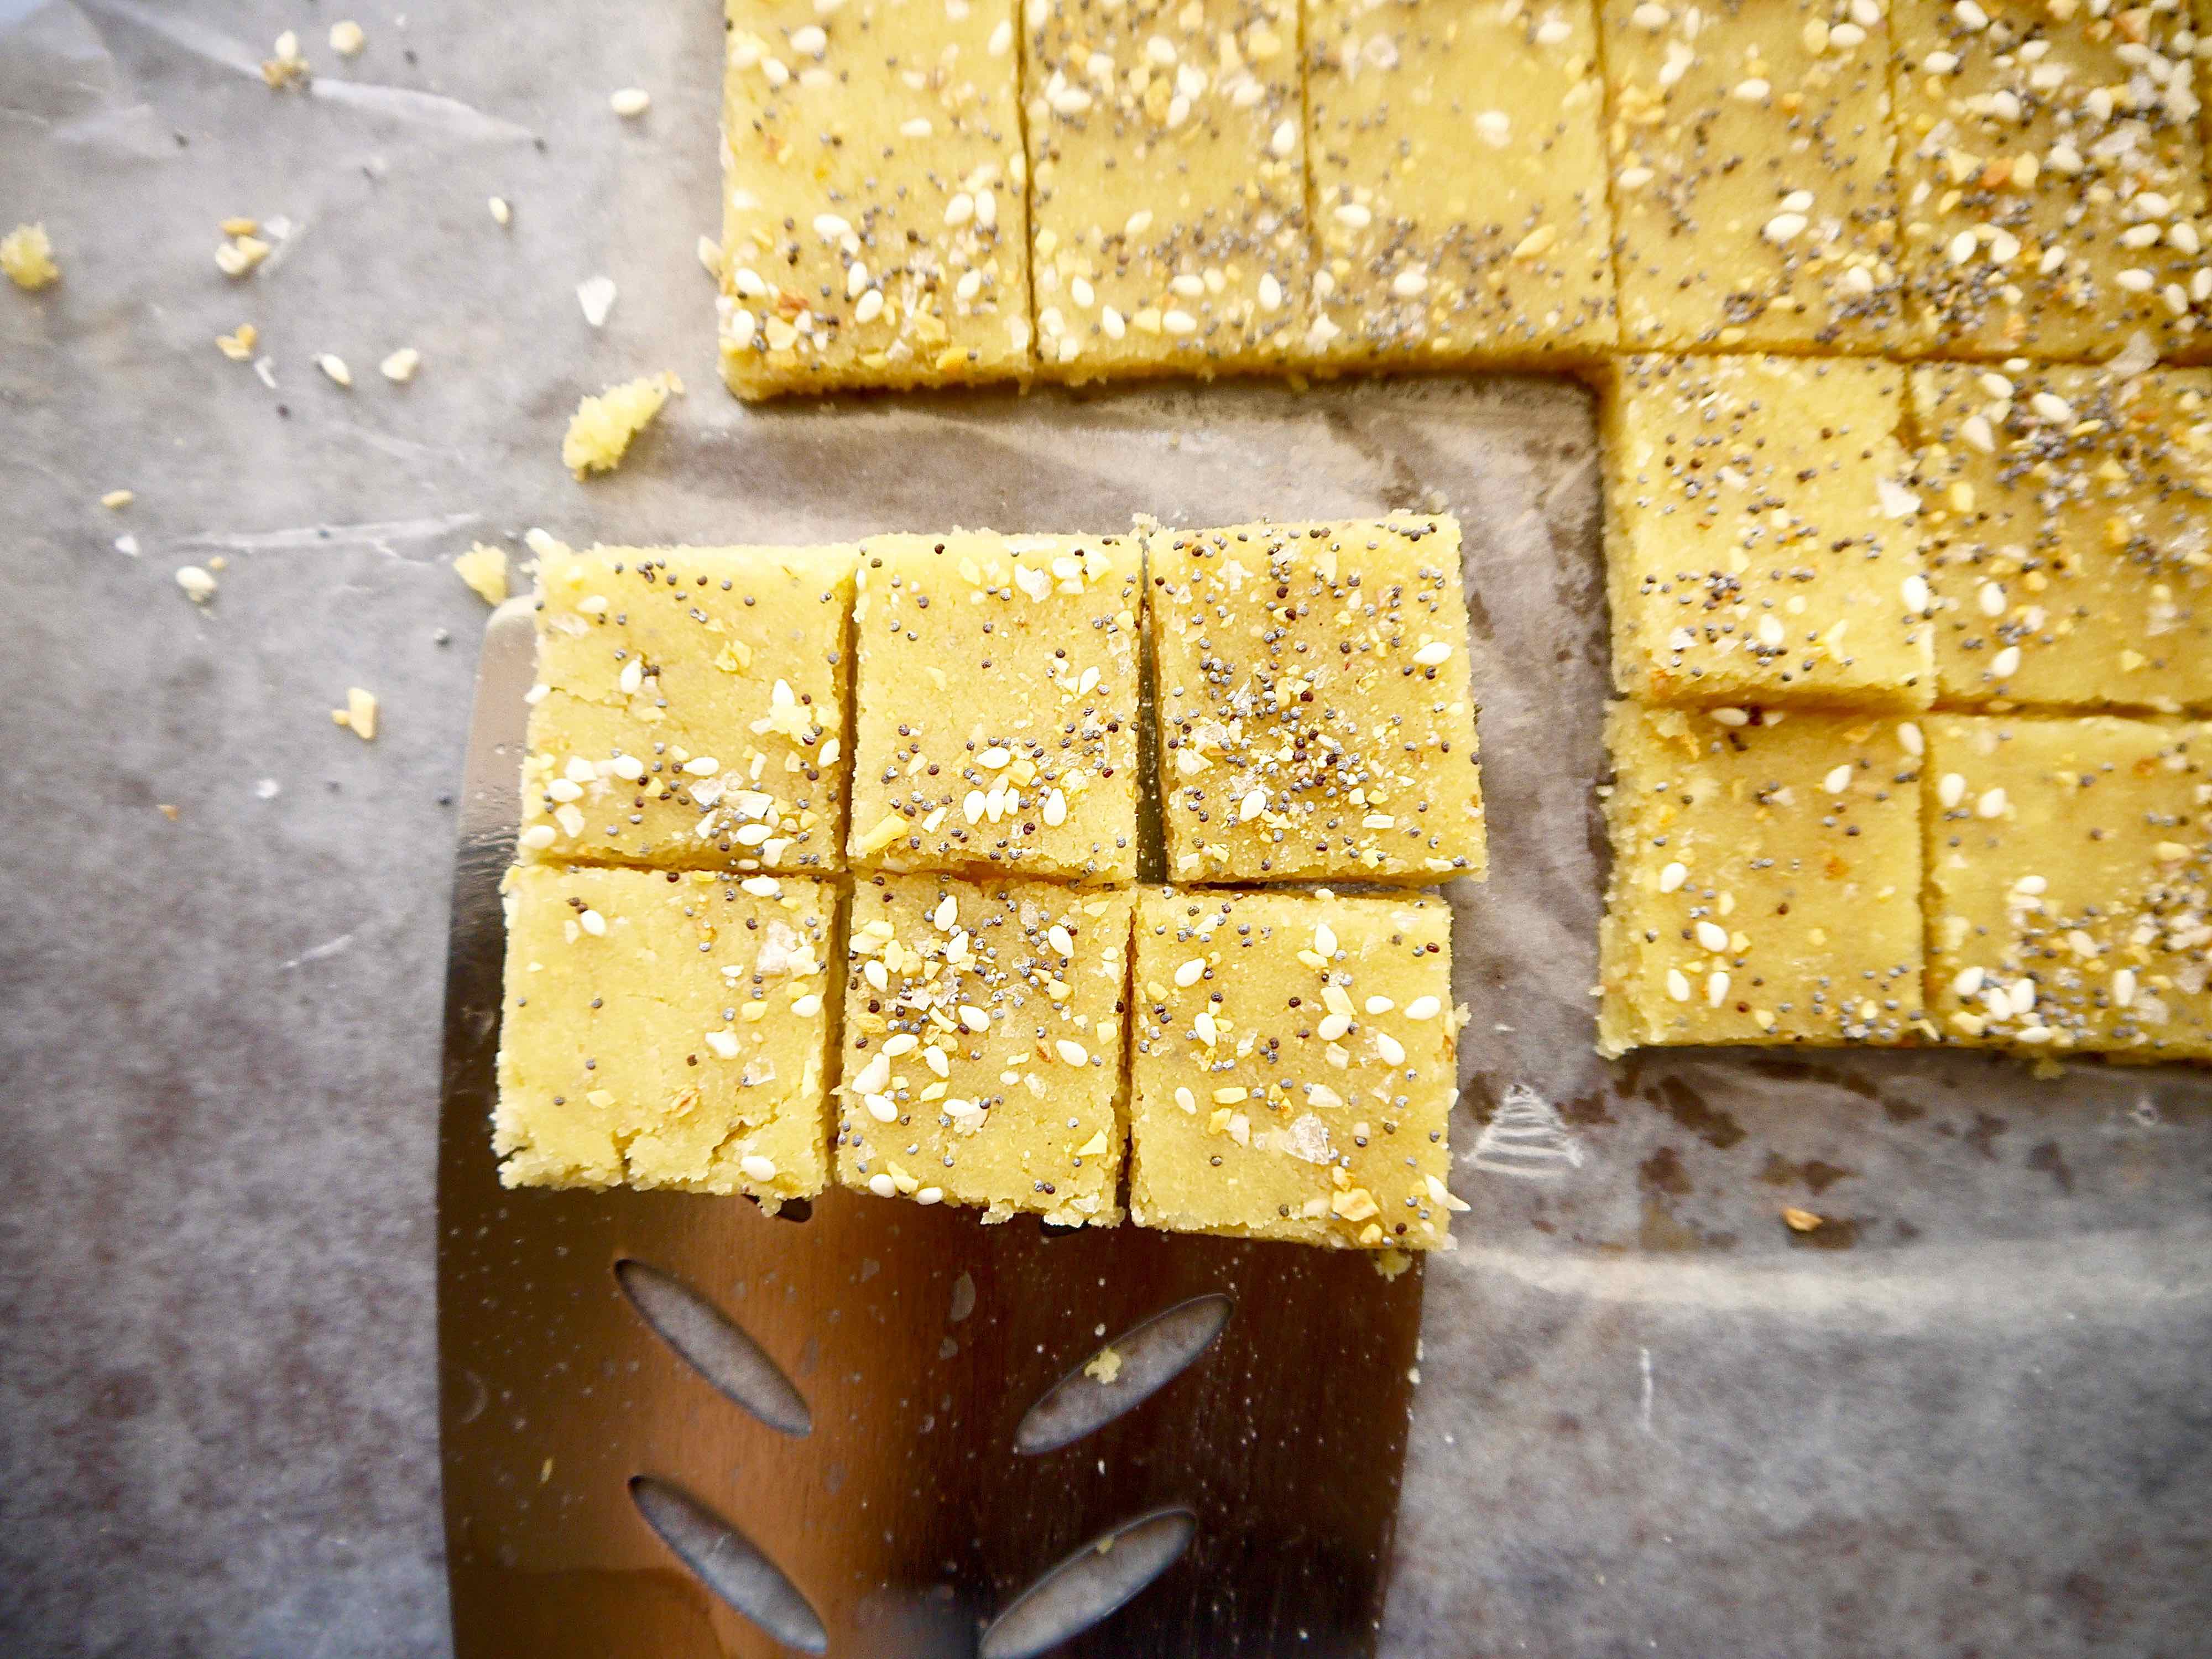 Almond flour cracker dough cut into squares before baking.